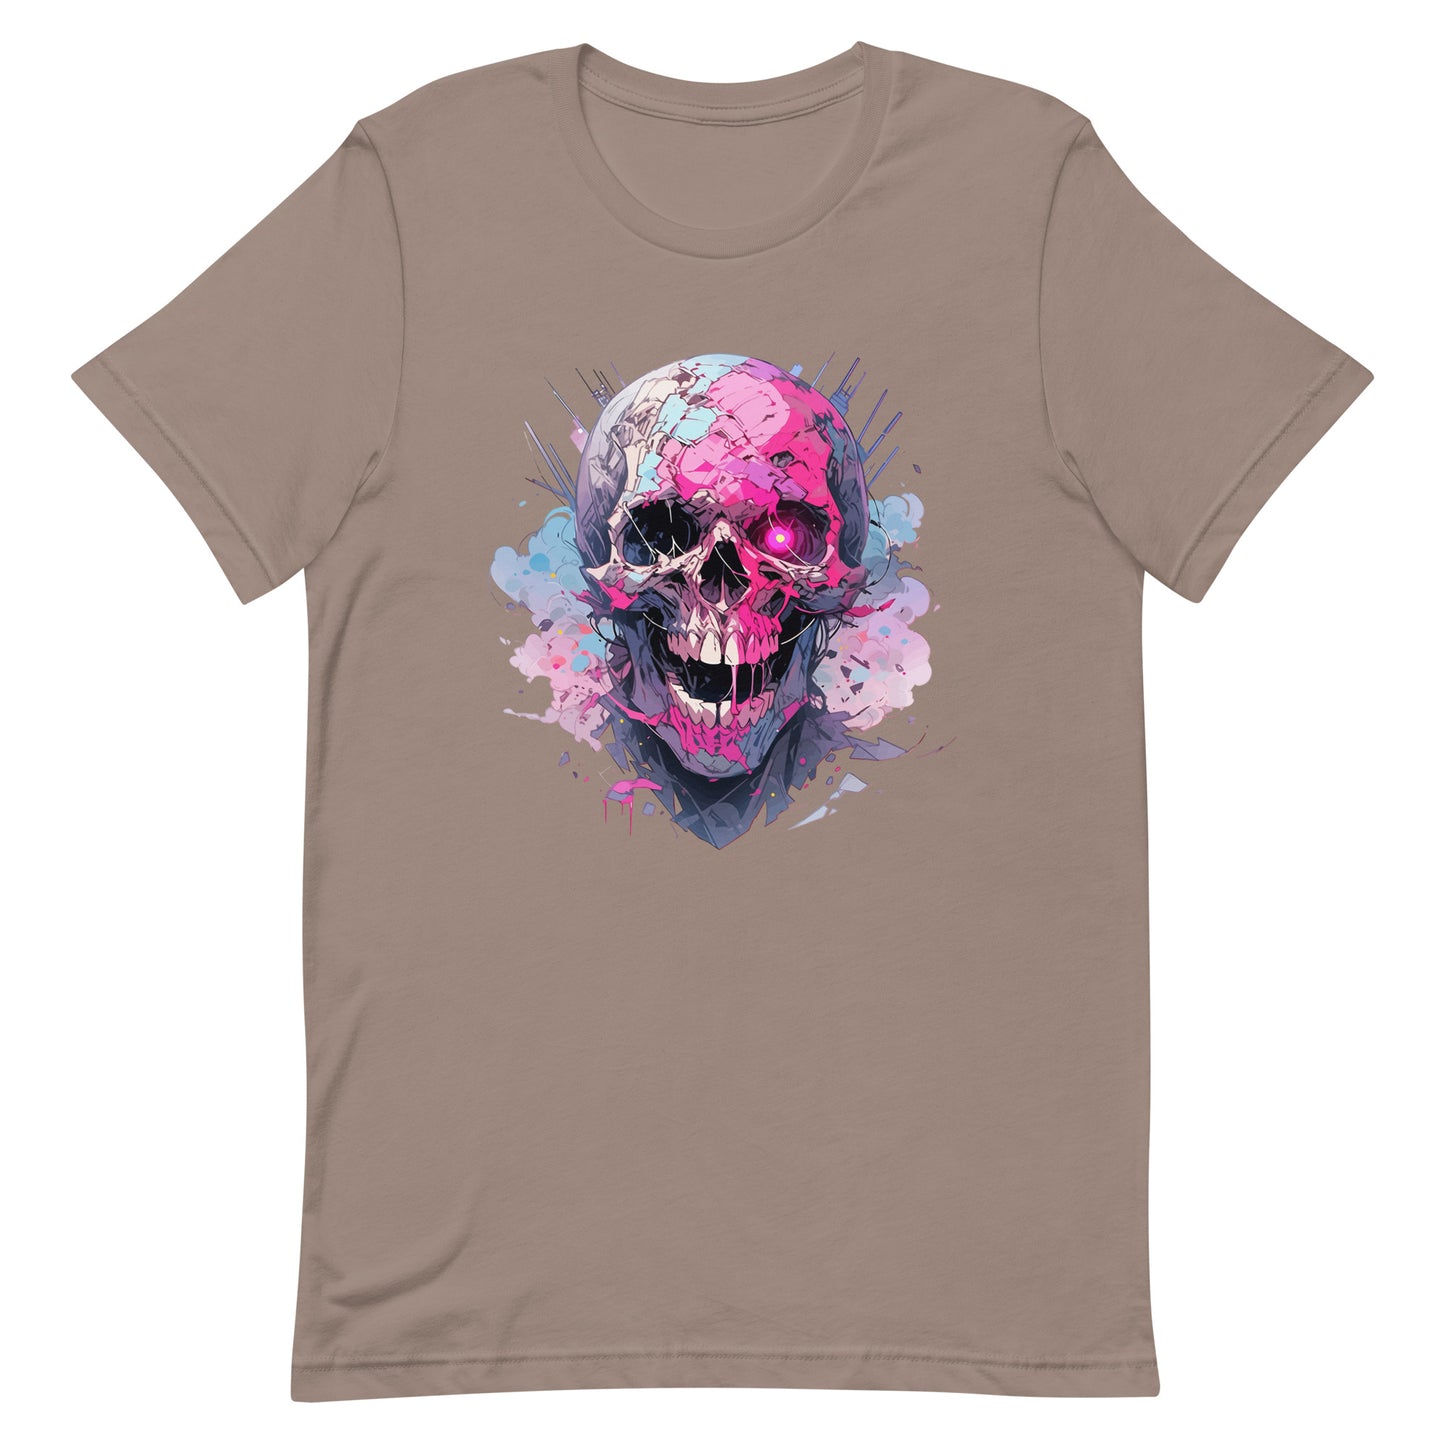 Cheerful zombie, Funny zombie illustration, Smile skull with red eye, Fantastic head bones, Horror funny fantasy - Unisex t-shirt